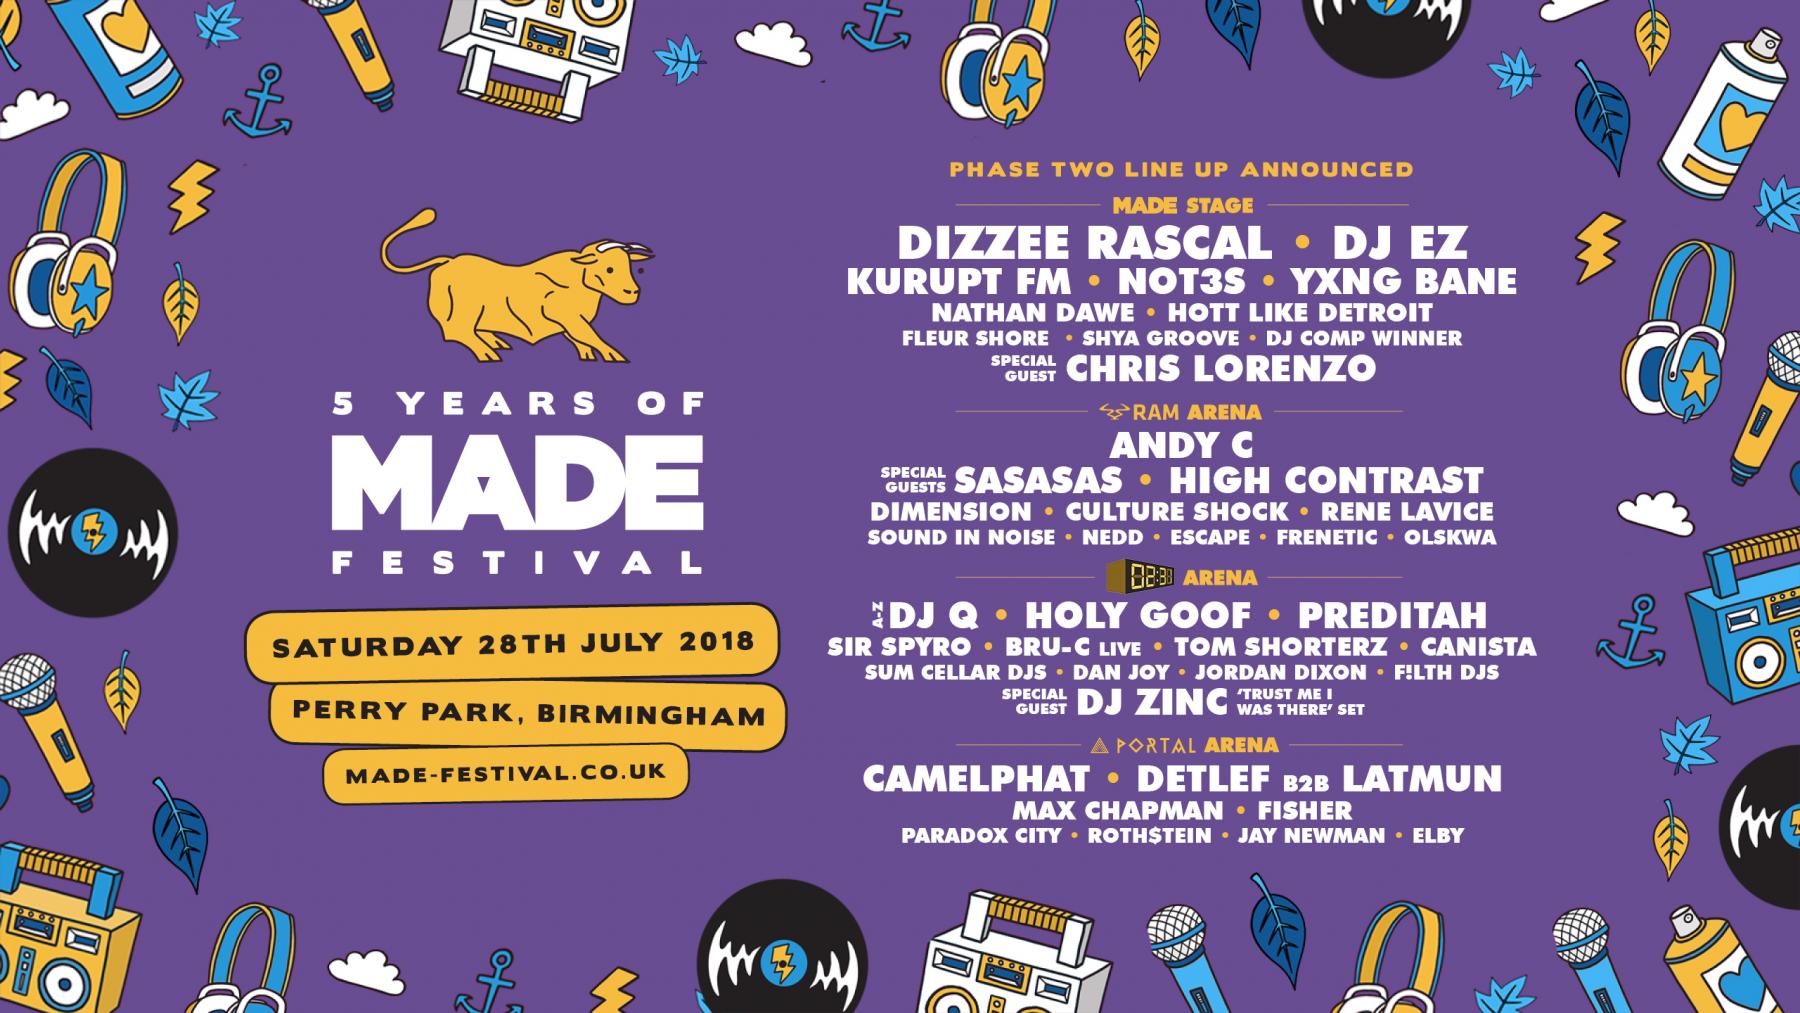 Made Festival 2018 Second Line Up